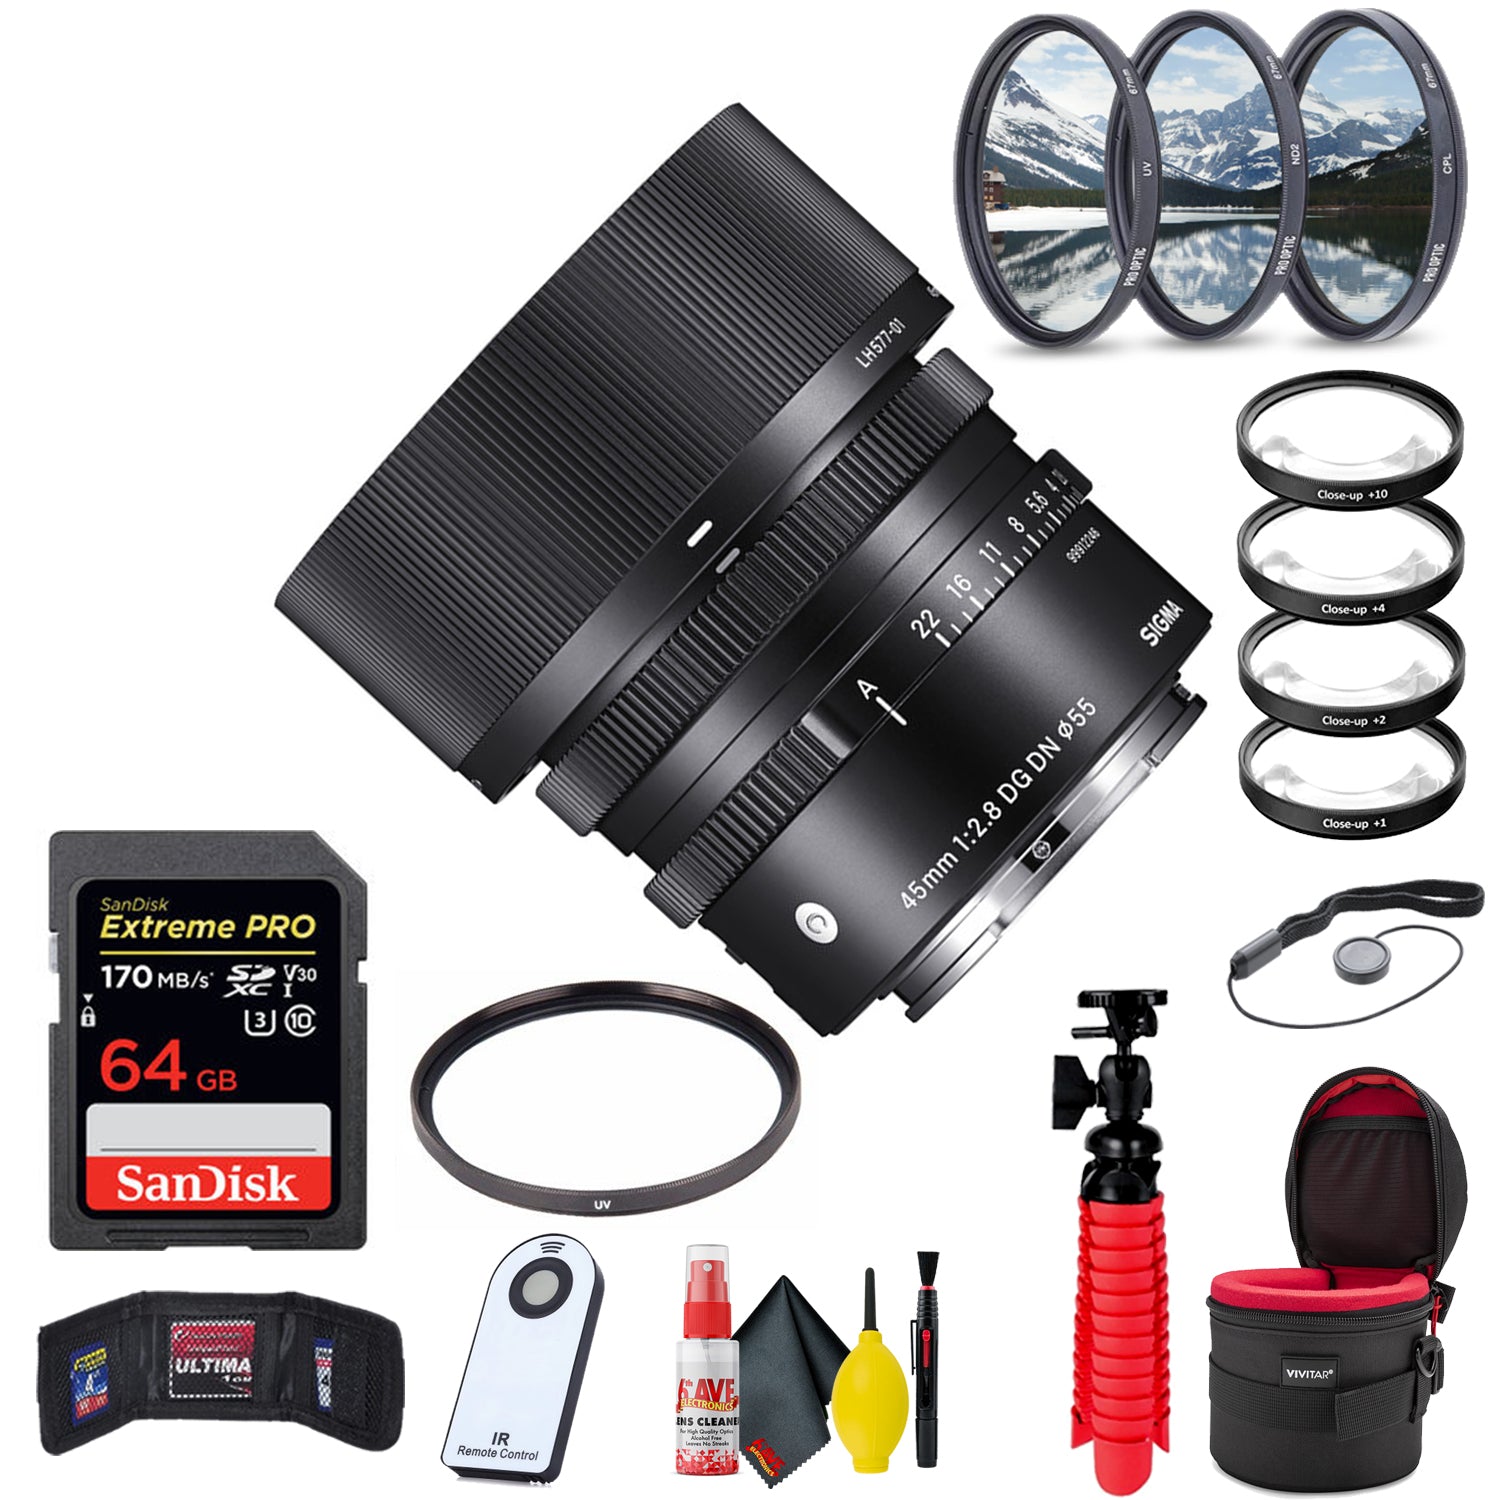 Sigma 45mm f/2.8 DG DN Contemporary Lens for Sony E + Accessories